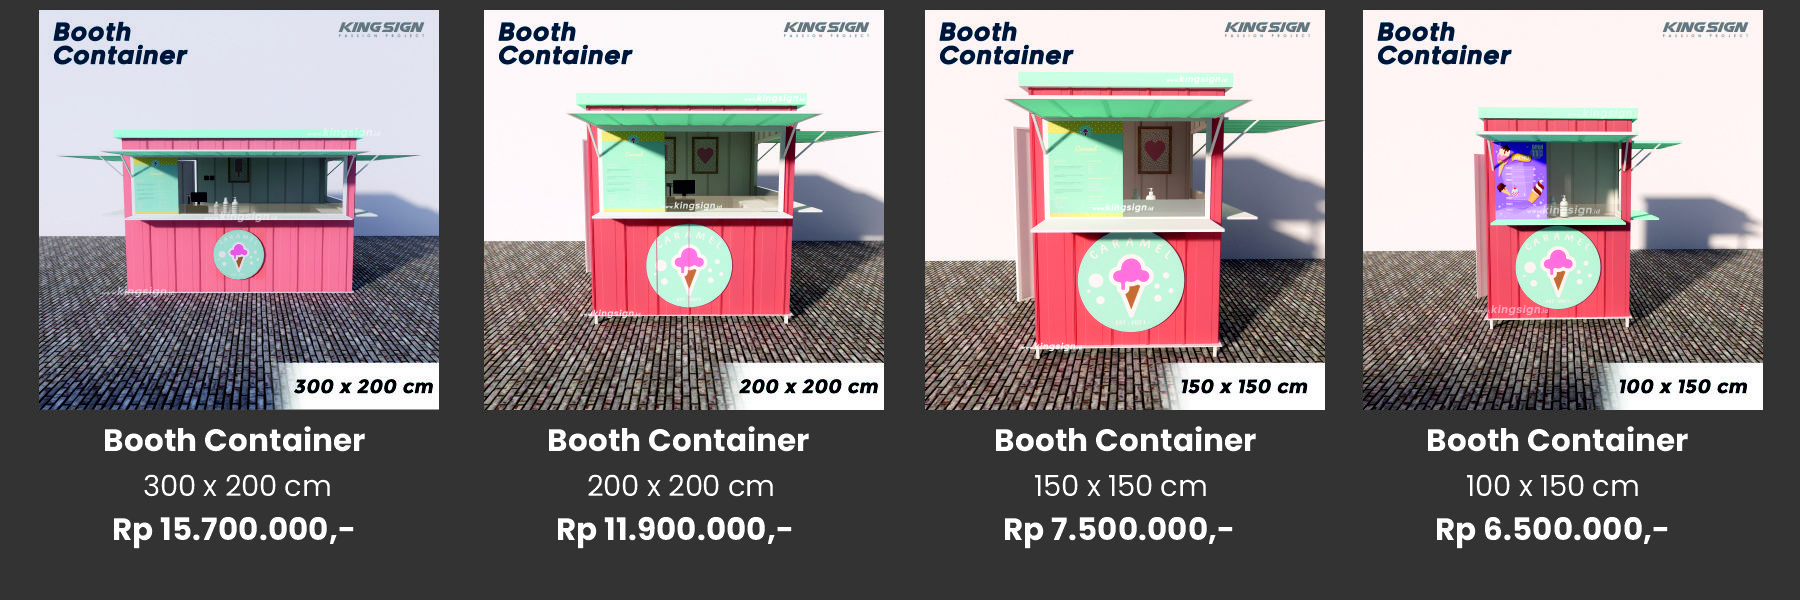 harga jual booth semi container bekas kontainer portabel food jakarta bogor depok tangerang selatan bekasi bandung bsd bintaro bandung